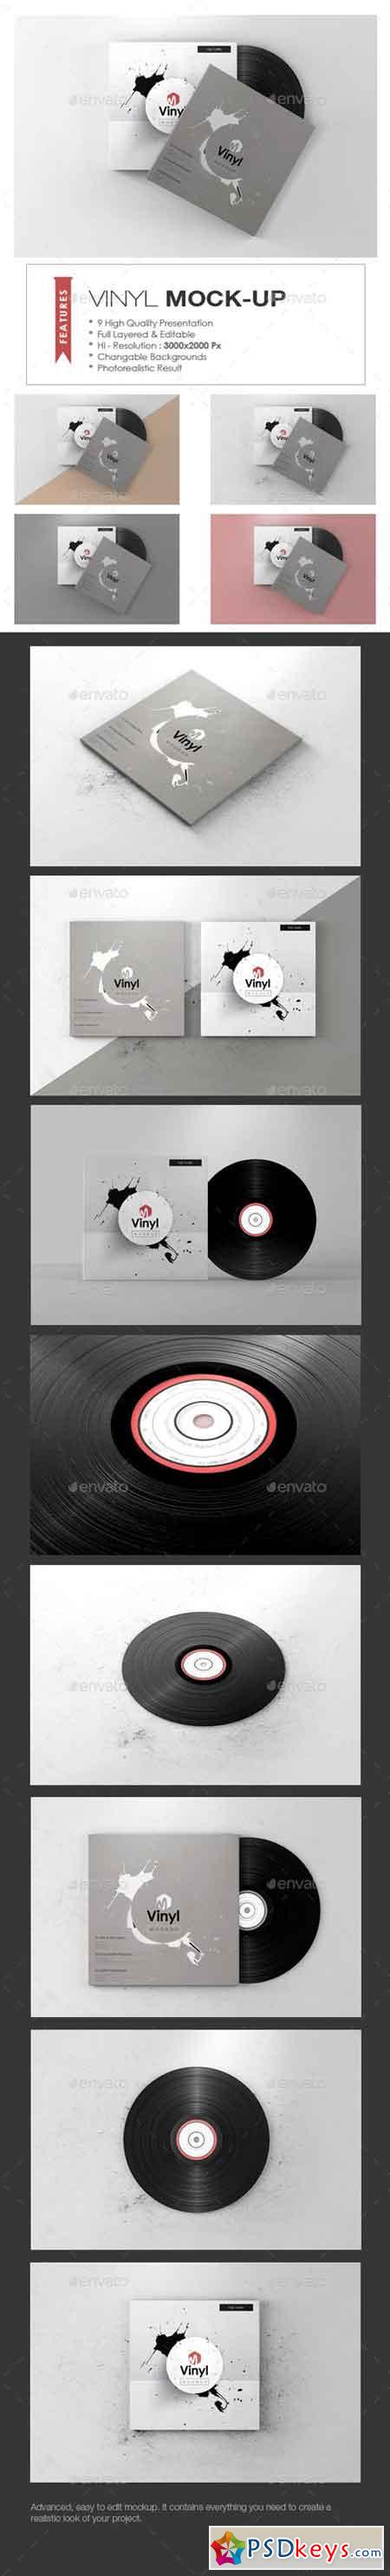 Download Vinyl Mock-up 19758502 » Free Download Photoshop Vector ...